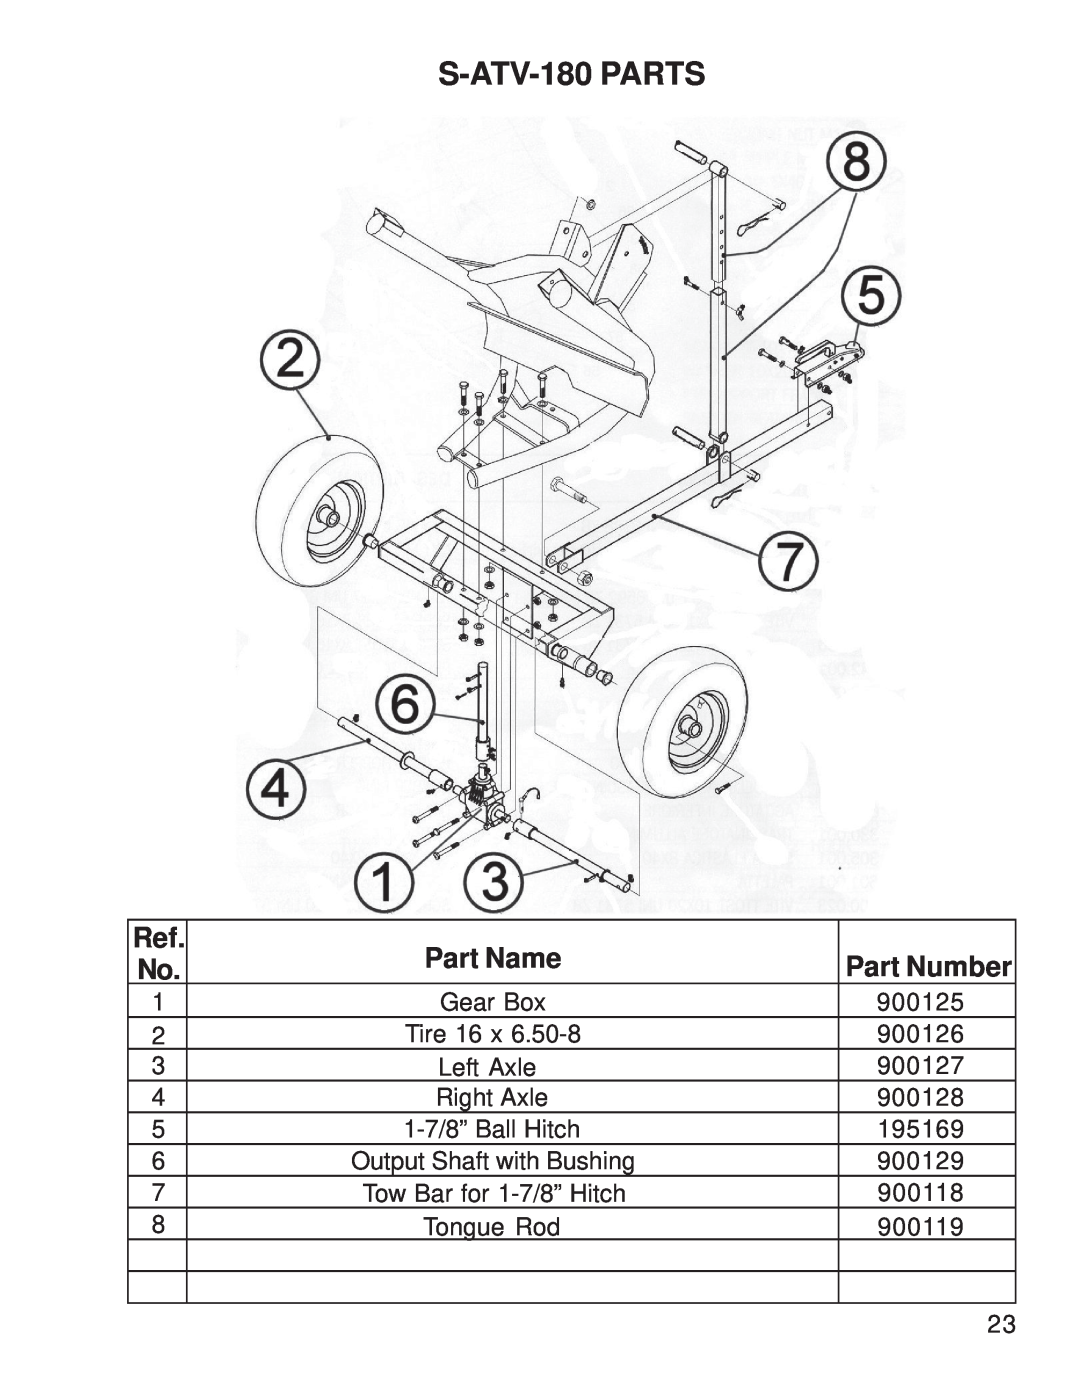 King Kutter S-ATV-180-U manual Part Name, Part Number, Gear Box 